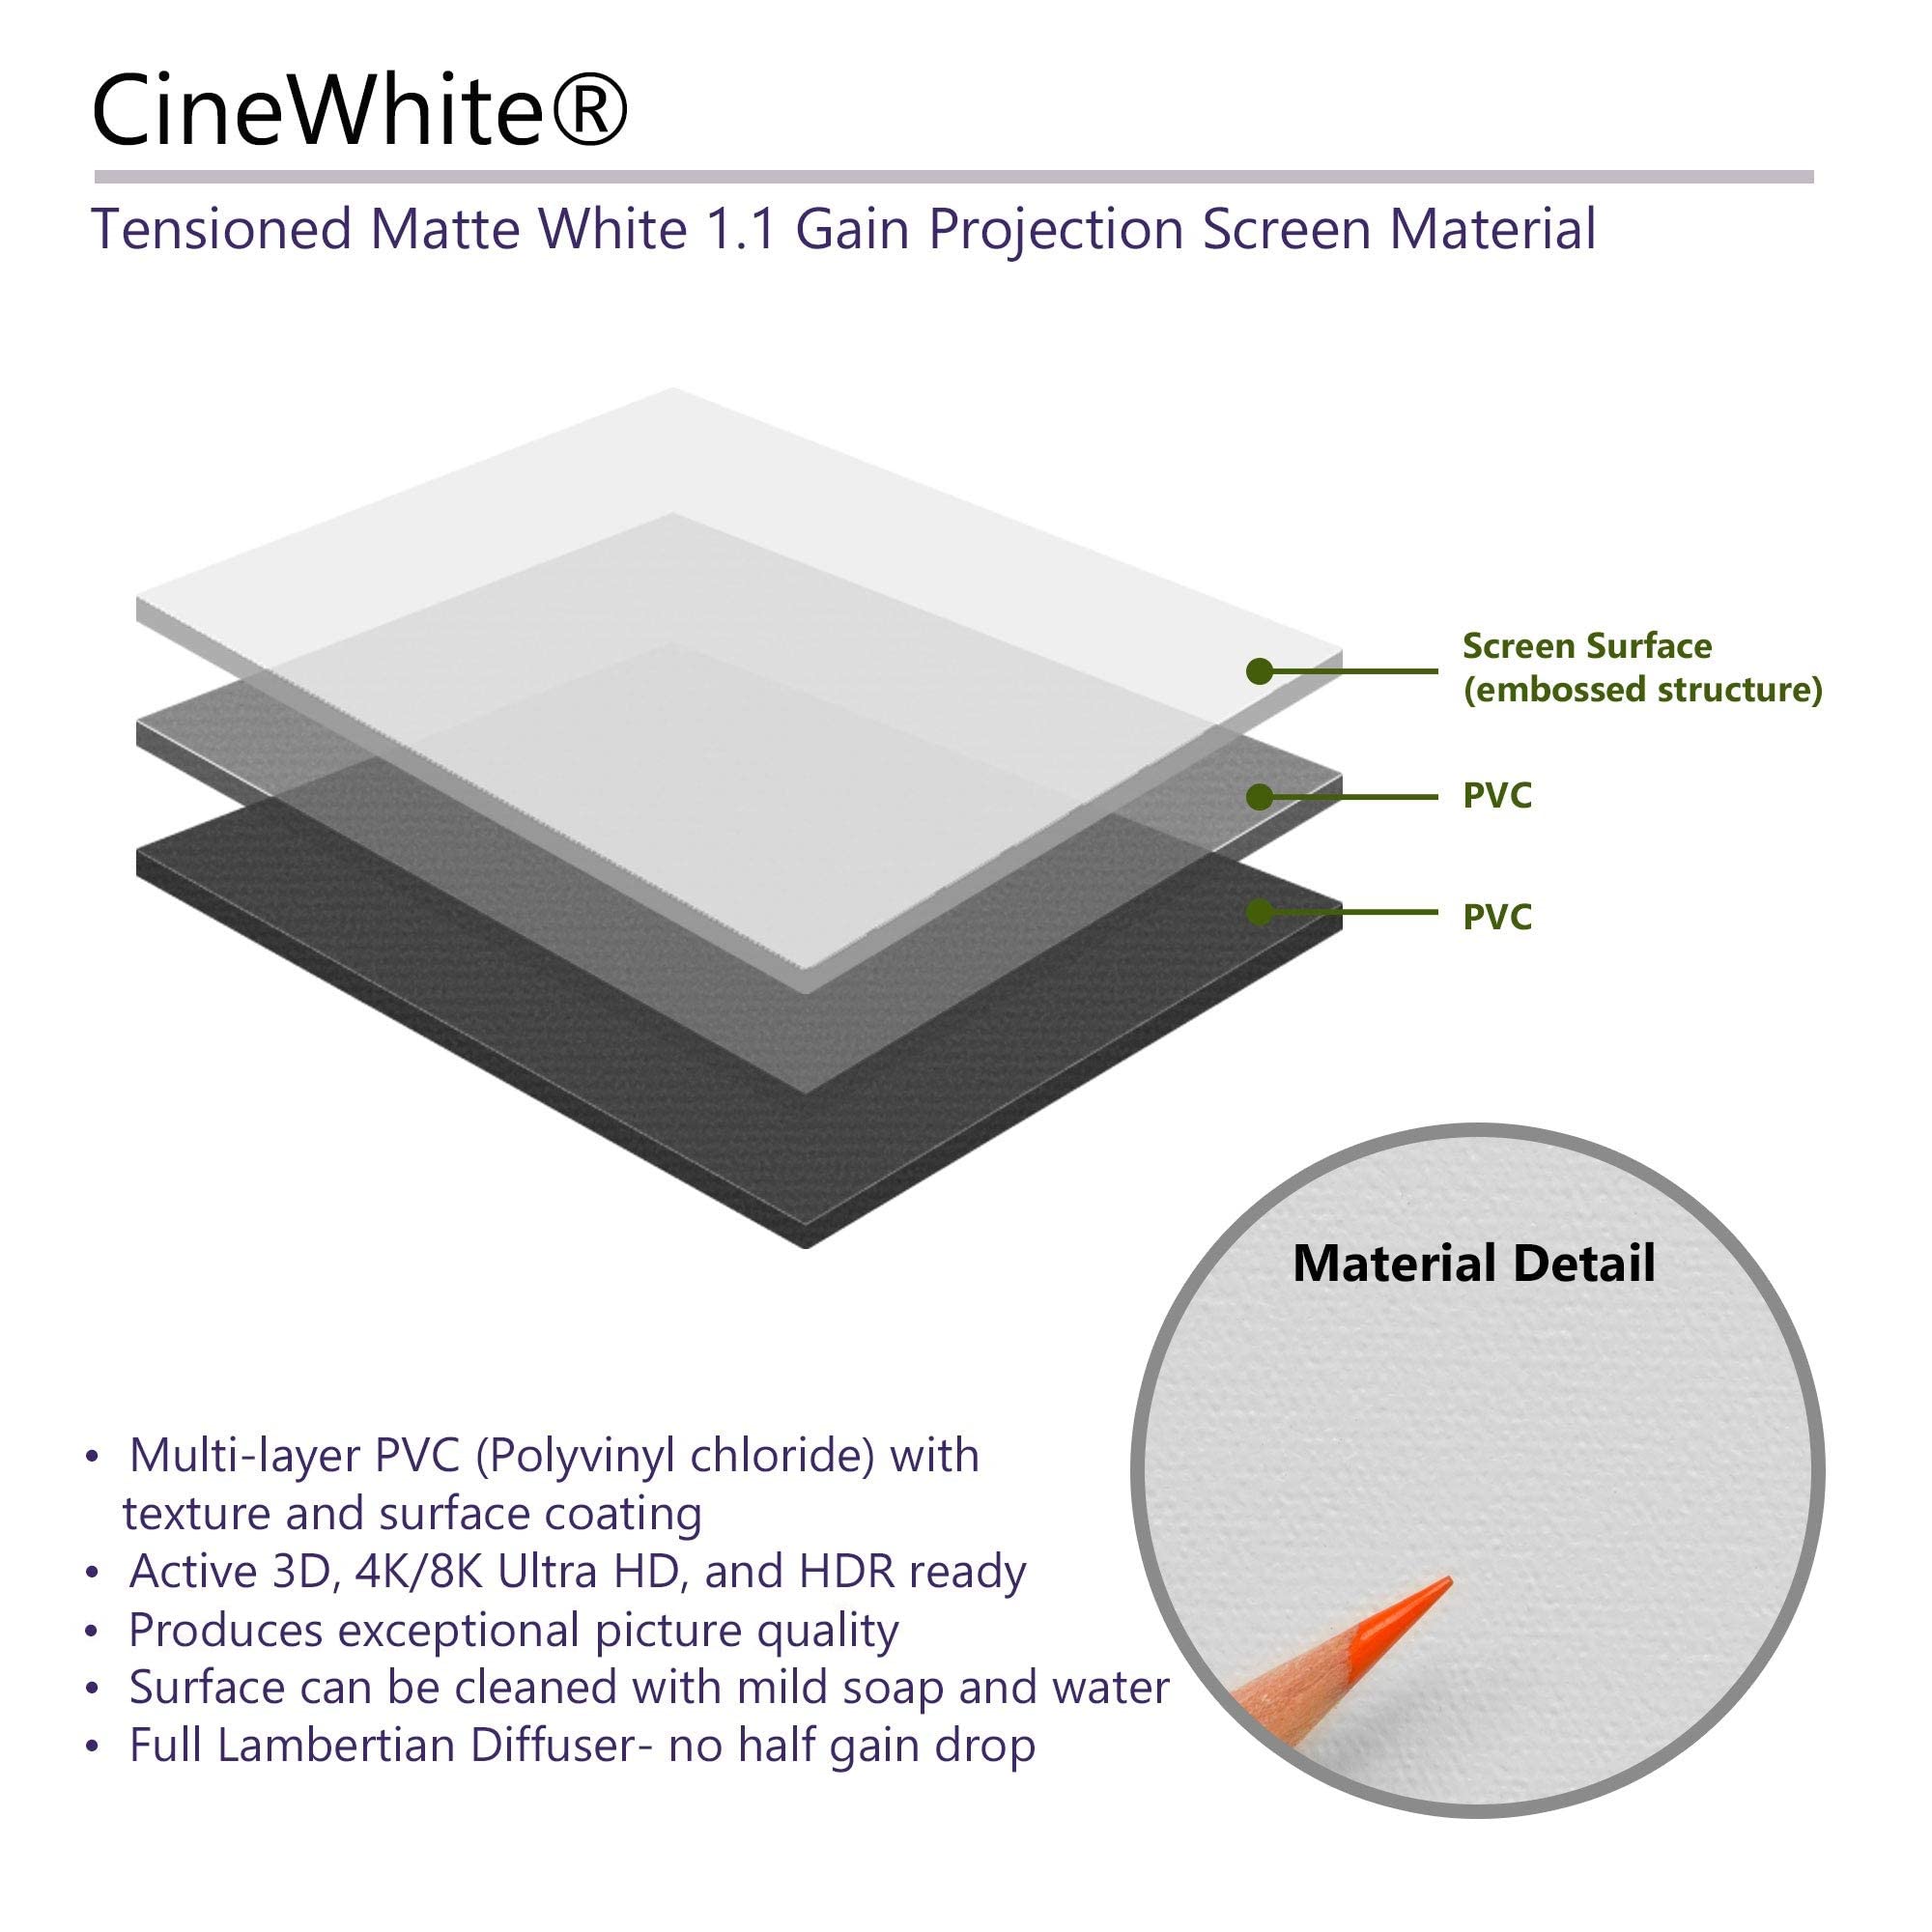 Elite Screens CineTension 2, 92-inch Diagonal 4:3, 4K/8K Tab-Tensioned Electric Drop Down Projection Projector Screen, TE92VW2